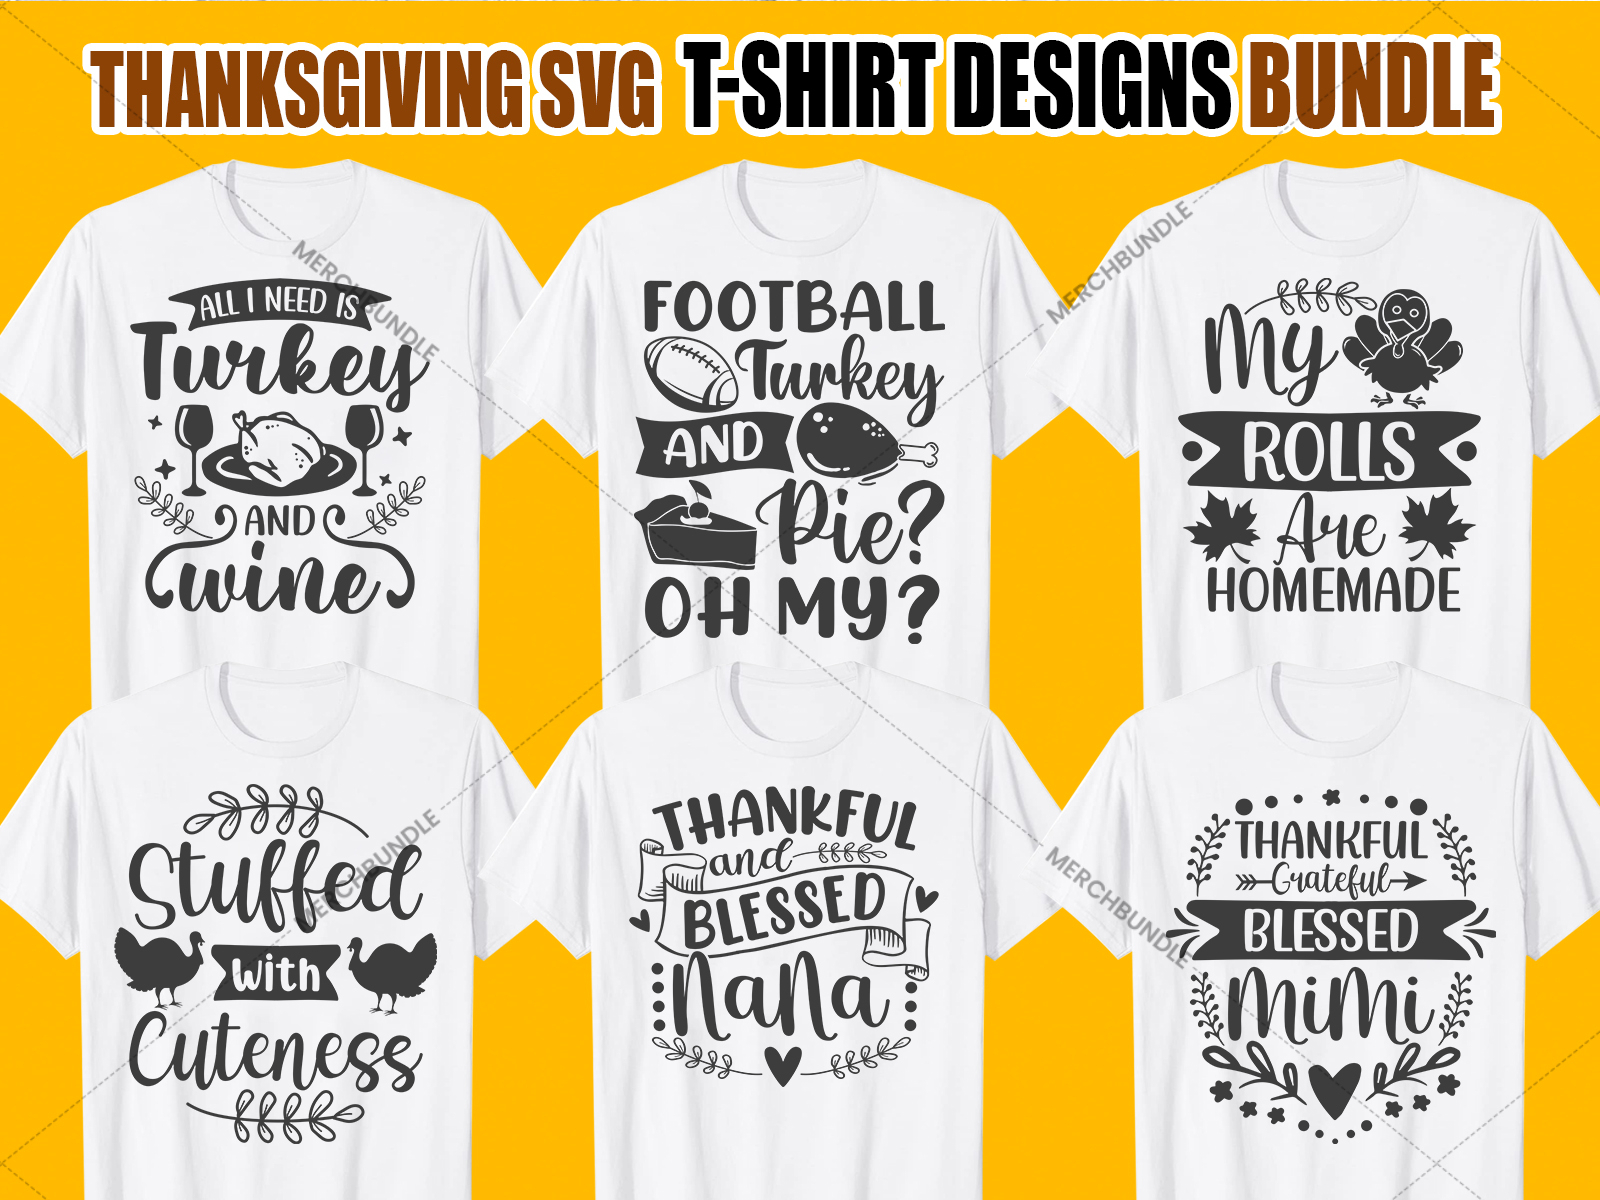 Thanksgiving SVG T Shirt Design Bundle by Merch Bundle on Dribbble